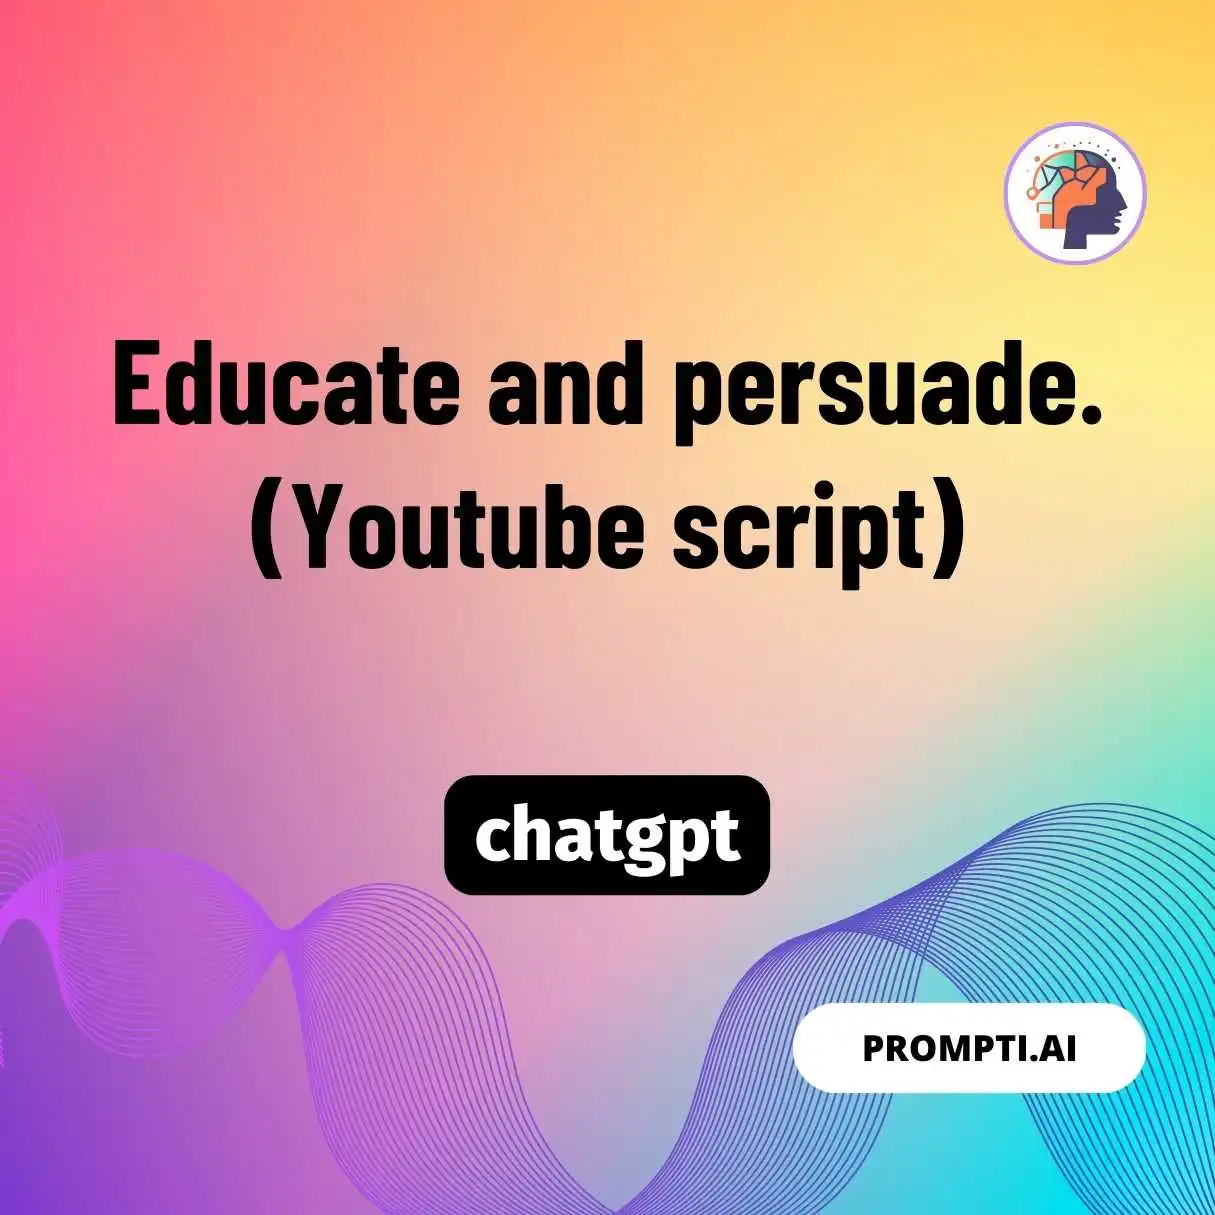 Educate and persuade. (Youtube script)